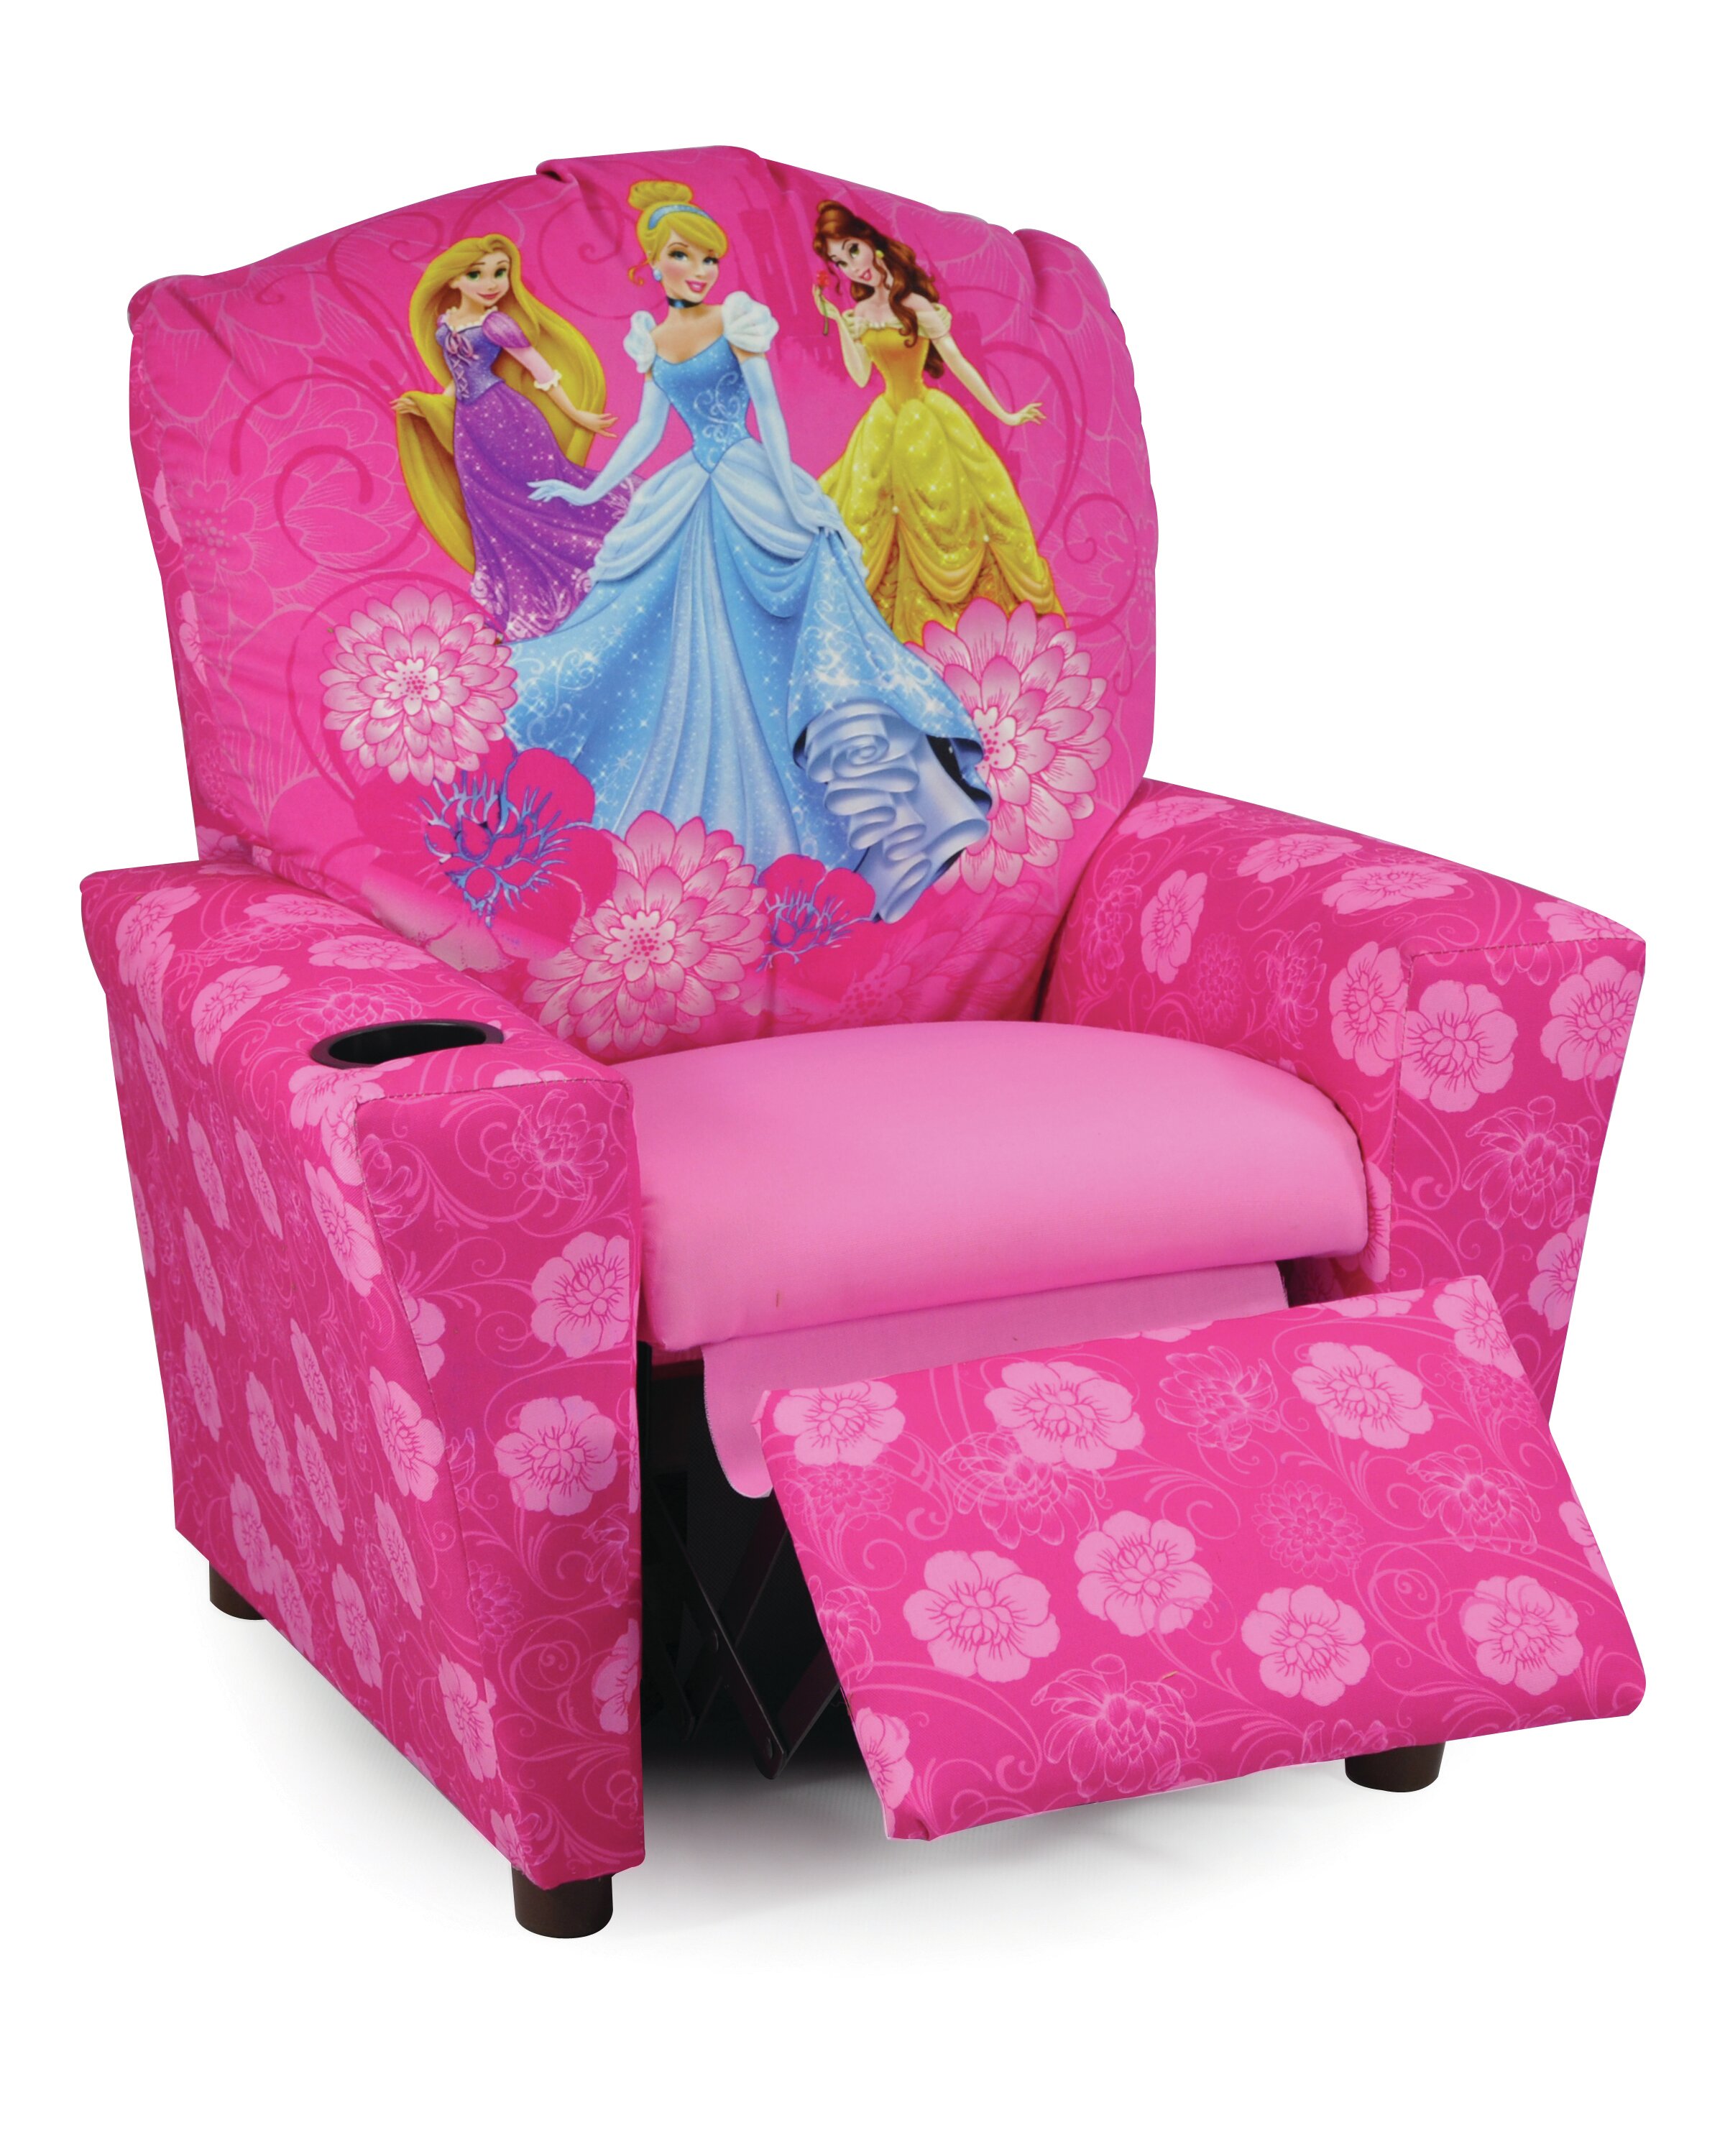 Kidzworld Disney Princesses Kids Chair With Cup Holder Reviews Wayfair